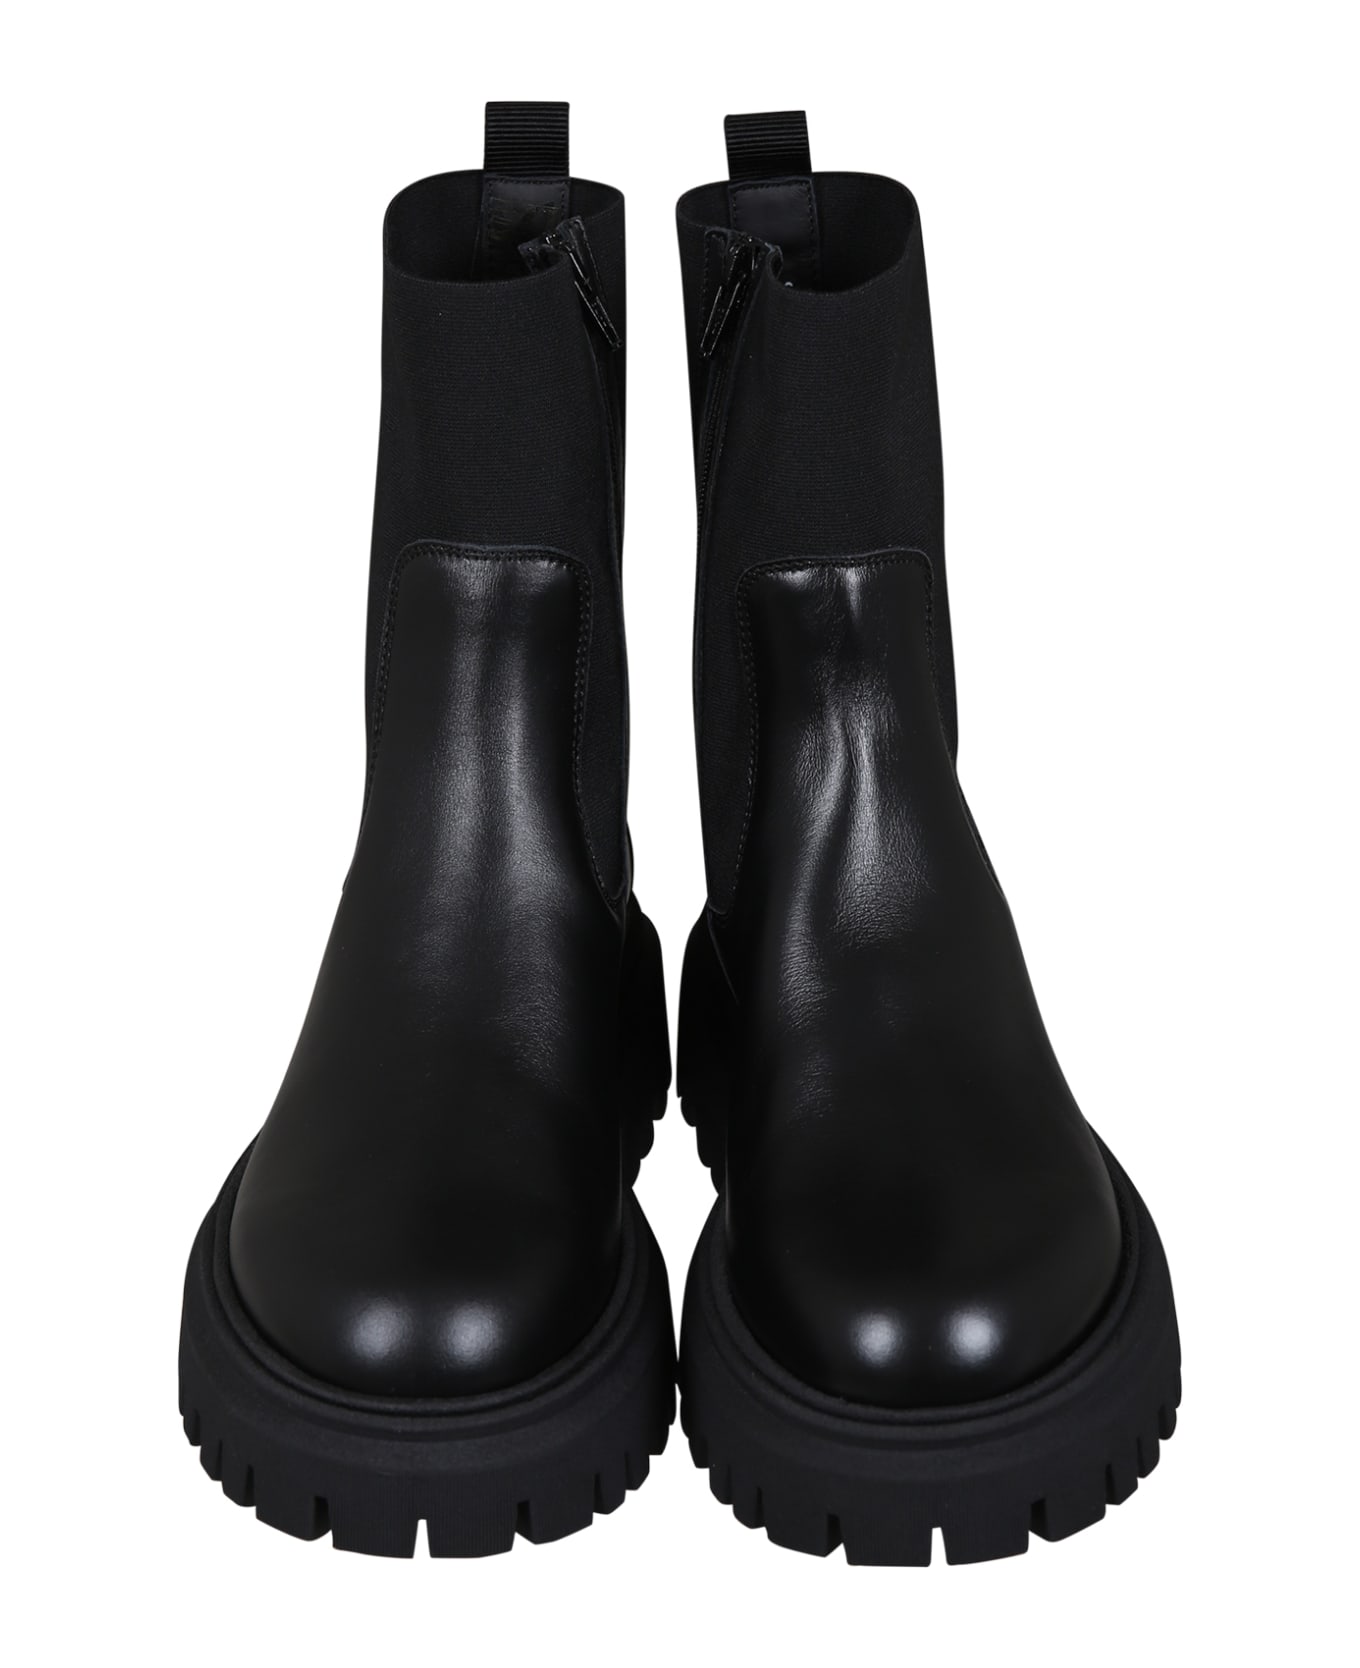 Moncler Black Boots For Girl With Logo - Black シューズ